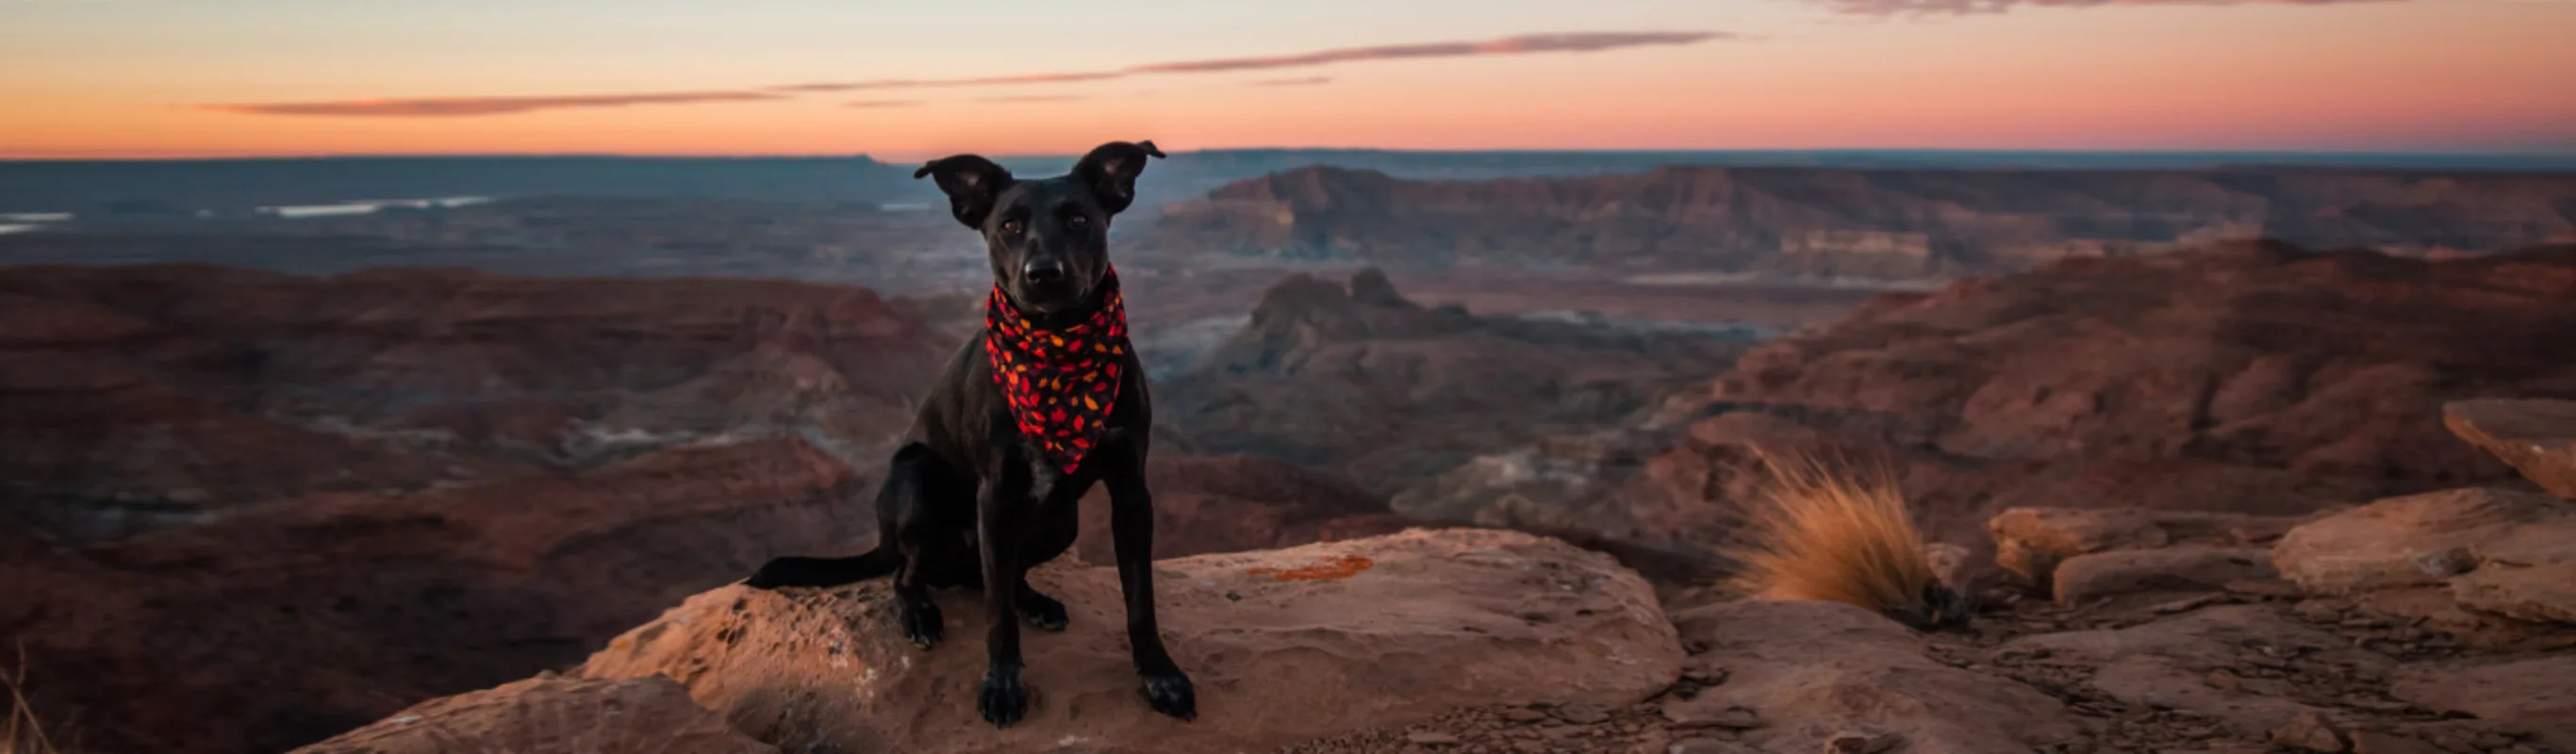 Black Dog with Red Bandana Overlooking Canyon